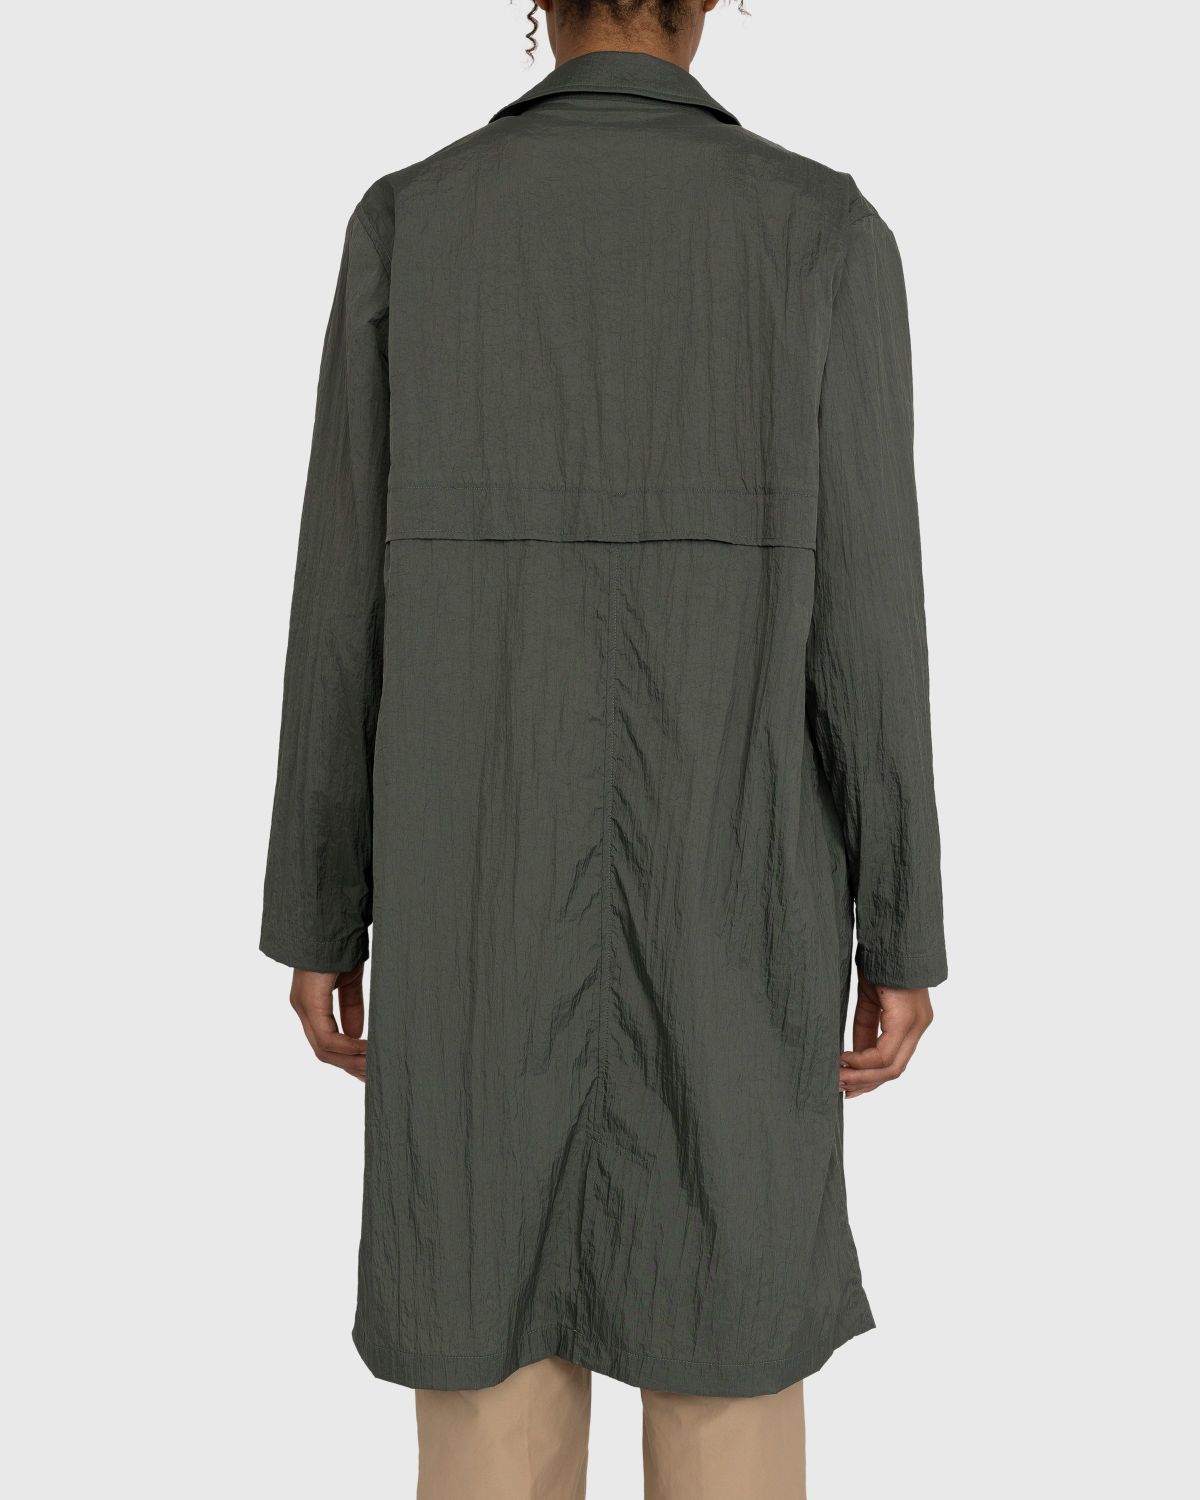 Highsnobiety – Crinkle Nylon Mac Khaki - Outerwear - Green - Image 4